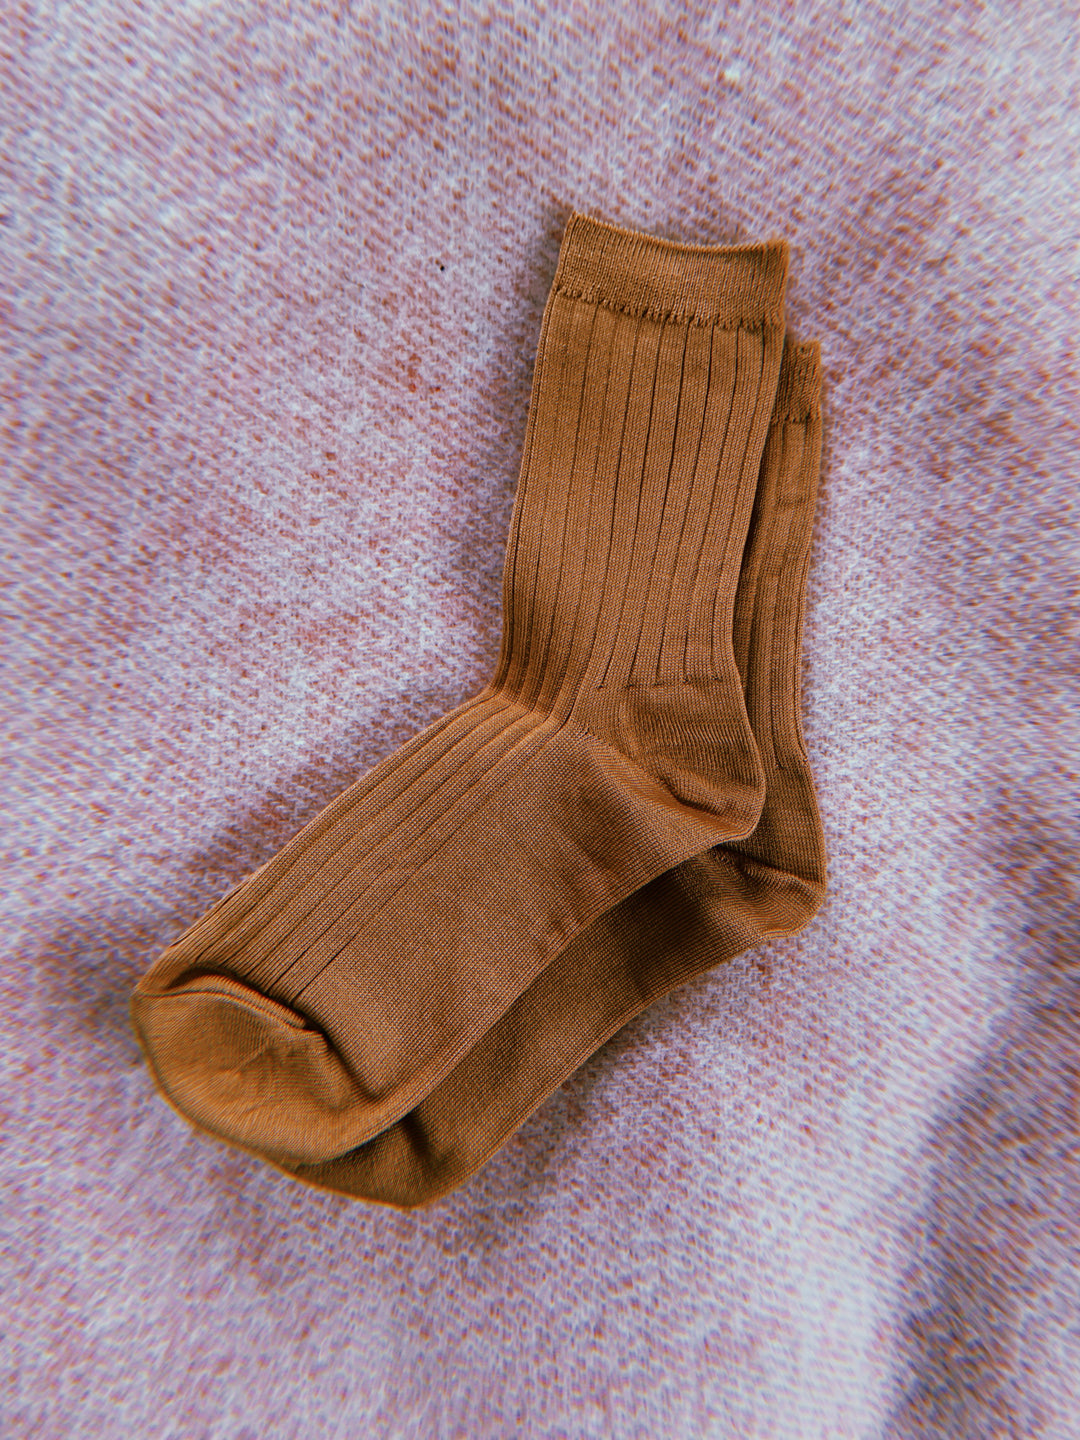 Twentyseven Toronto - Le Bon Shoppe Her Socks (MC Cotton) -  Peanut Butter